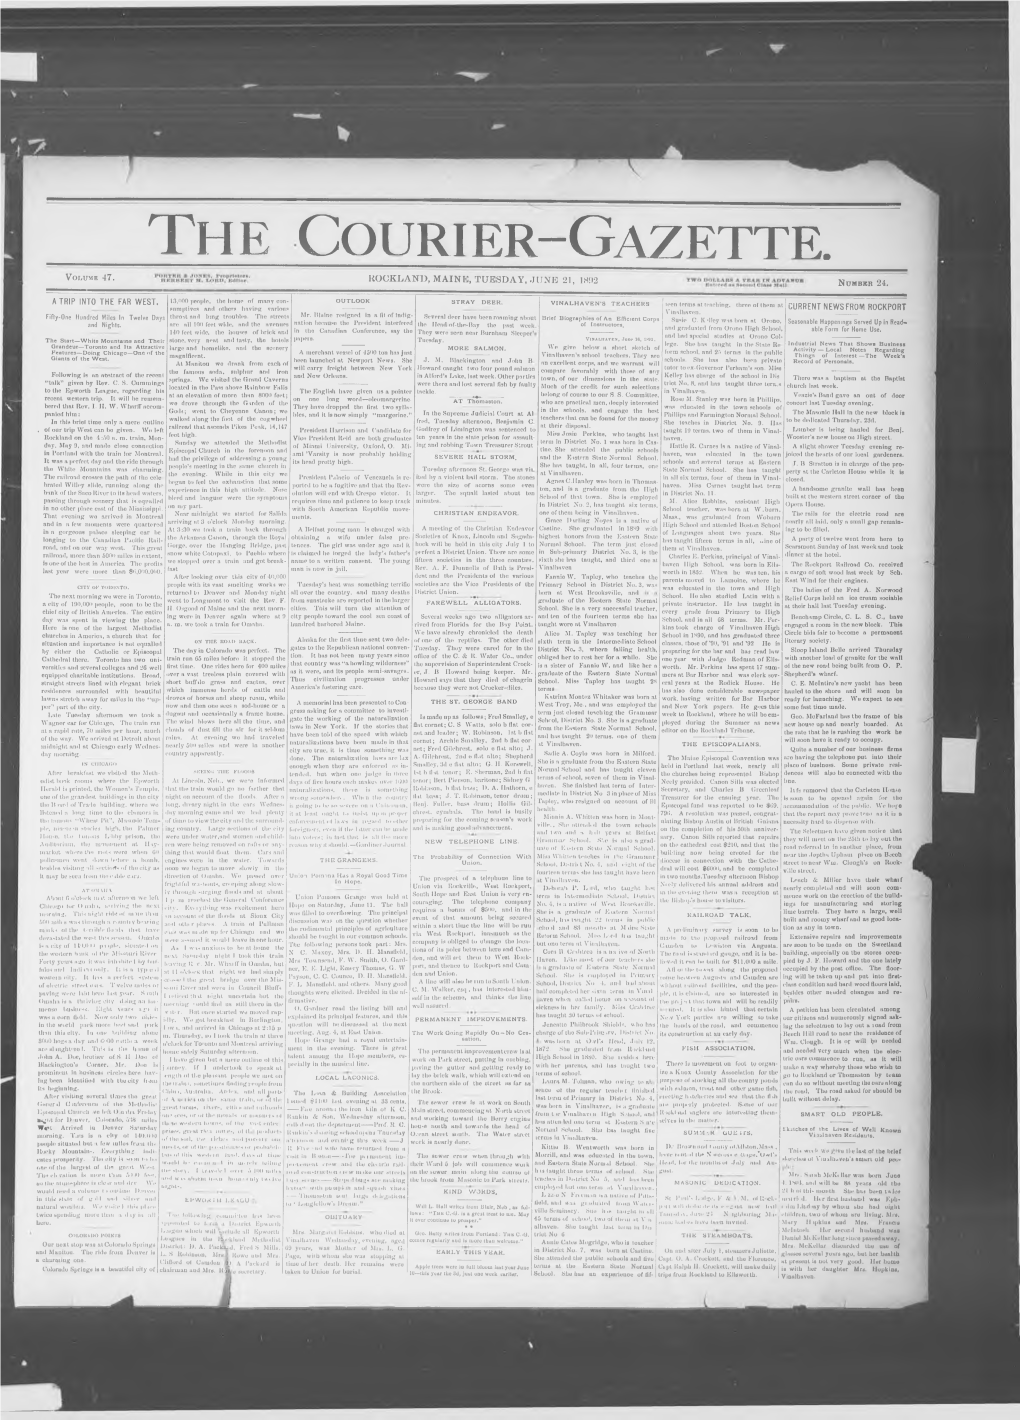 Courier Gazette: Tuesday, June 21, 1892